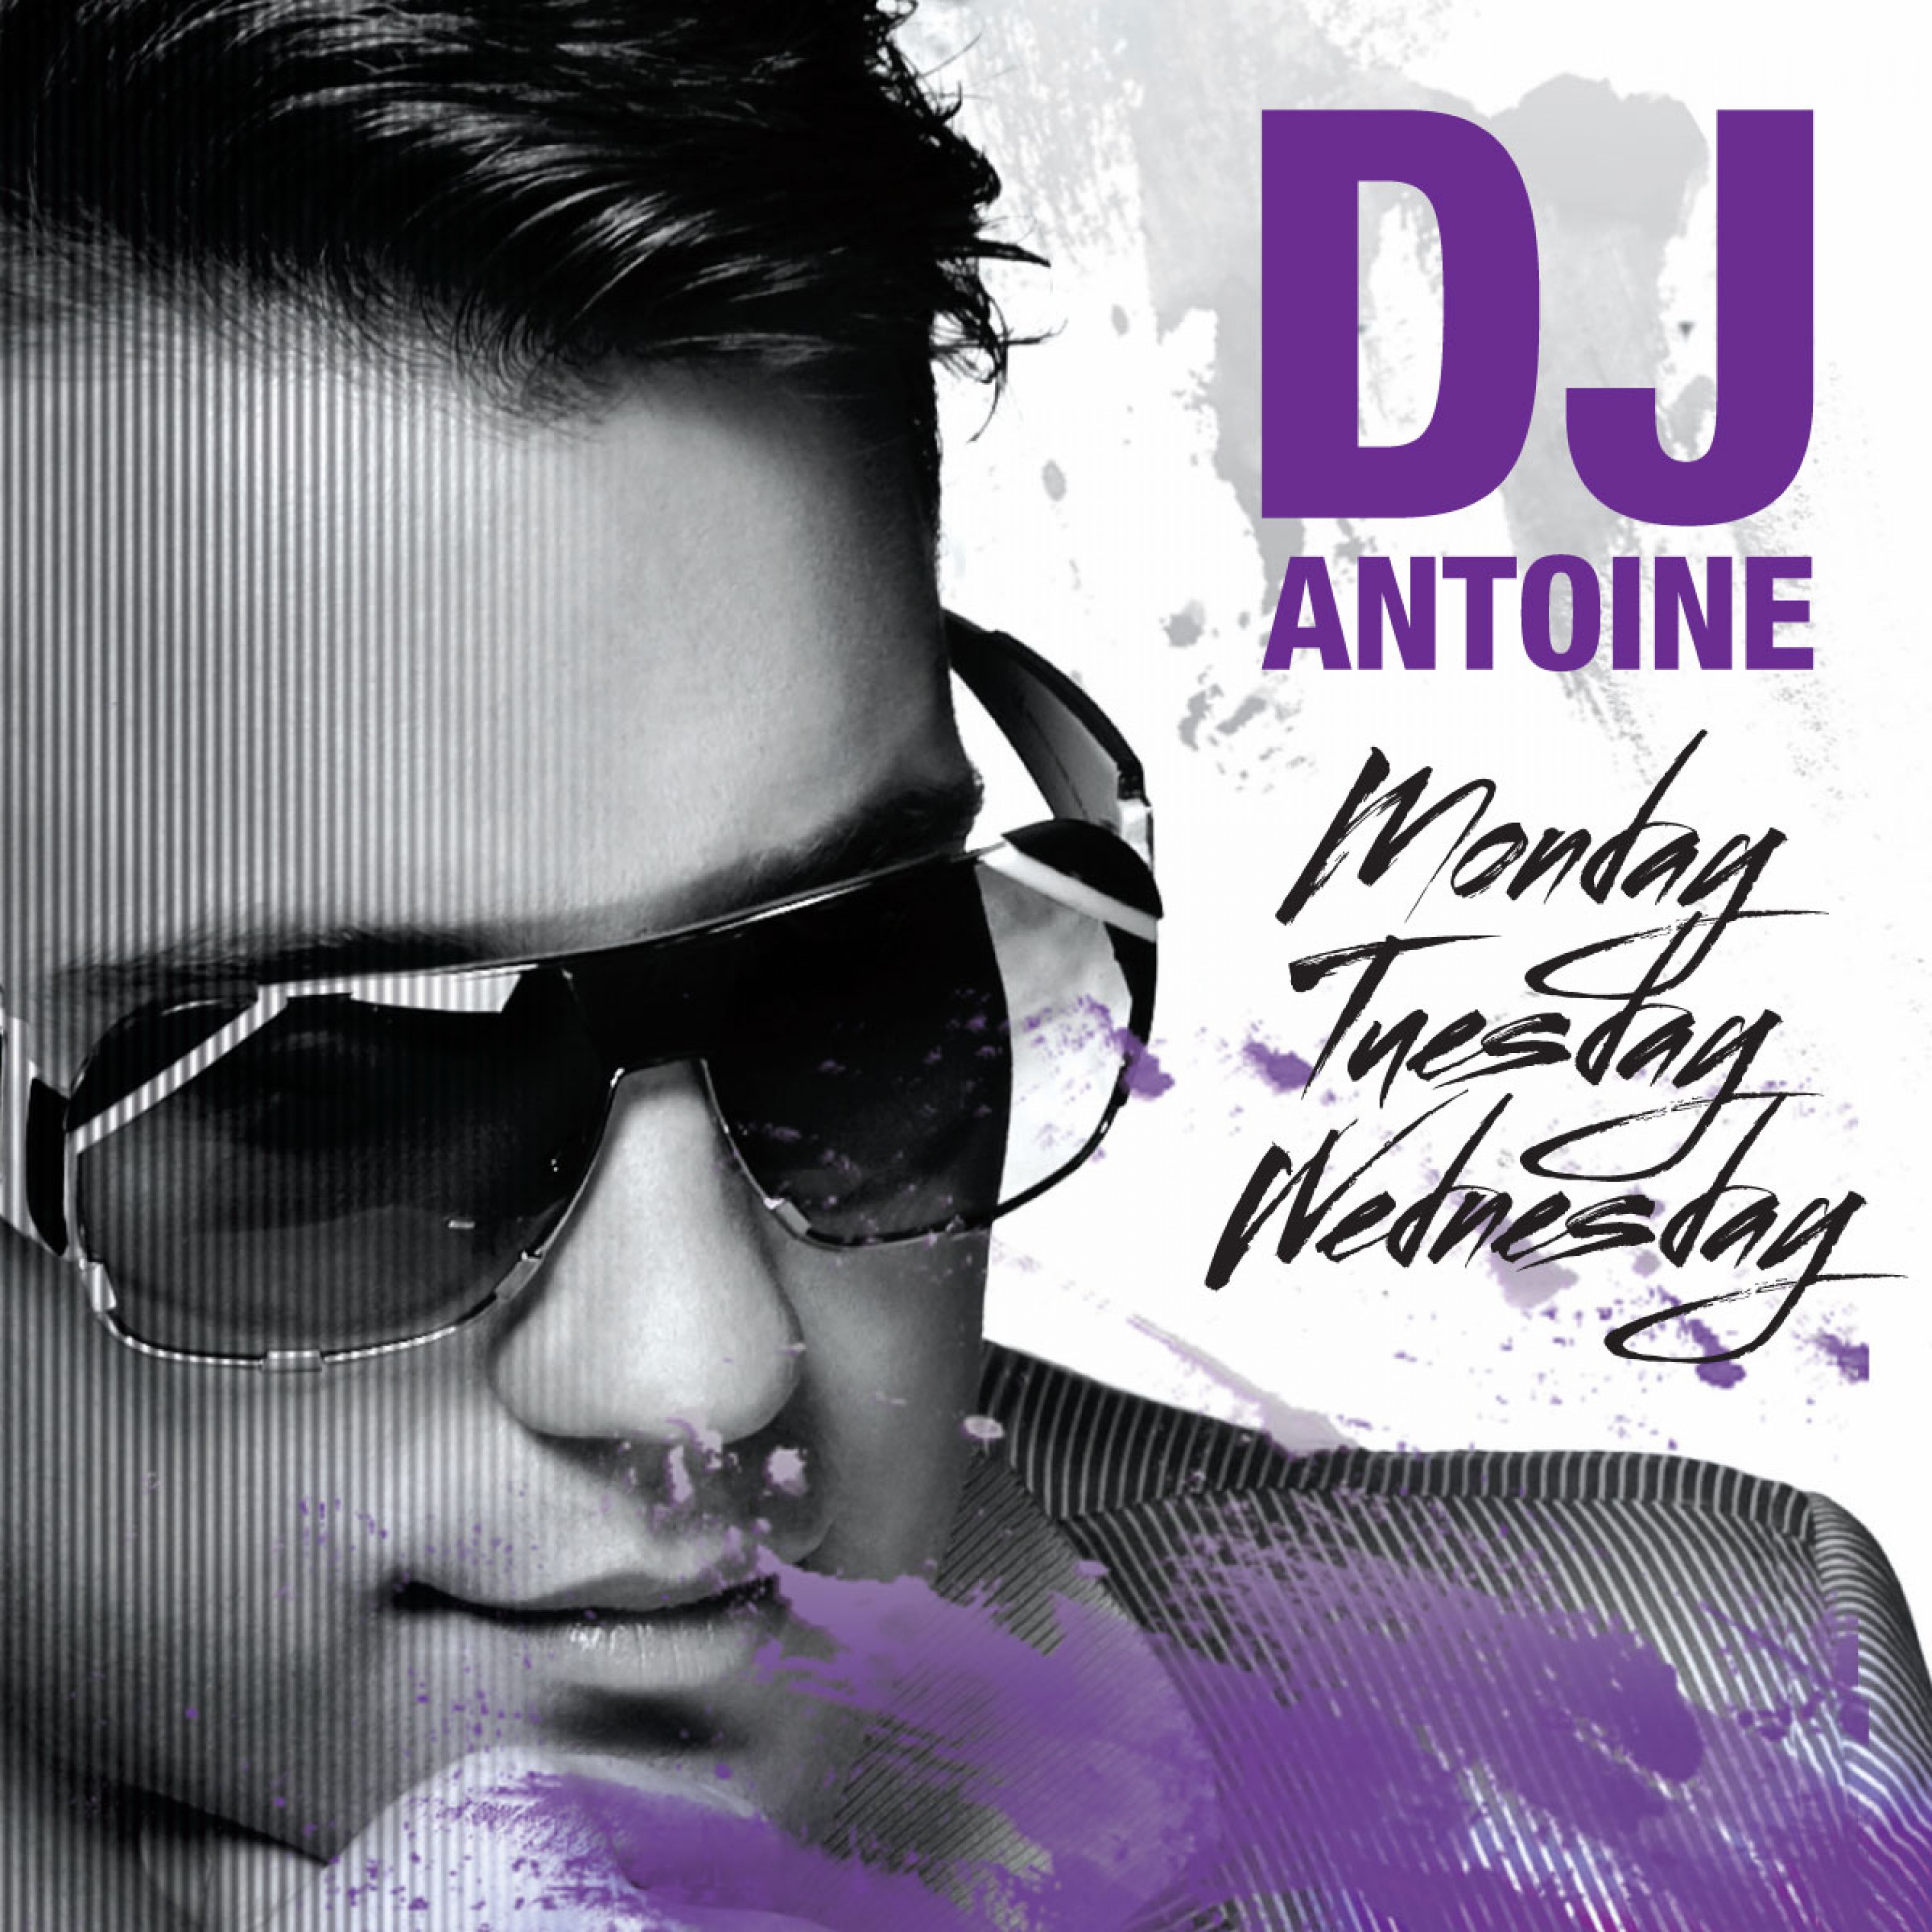 Monday, Tuesday, Wednesday (DJ Antoine vs Mad Mark Dub Mix)